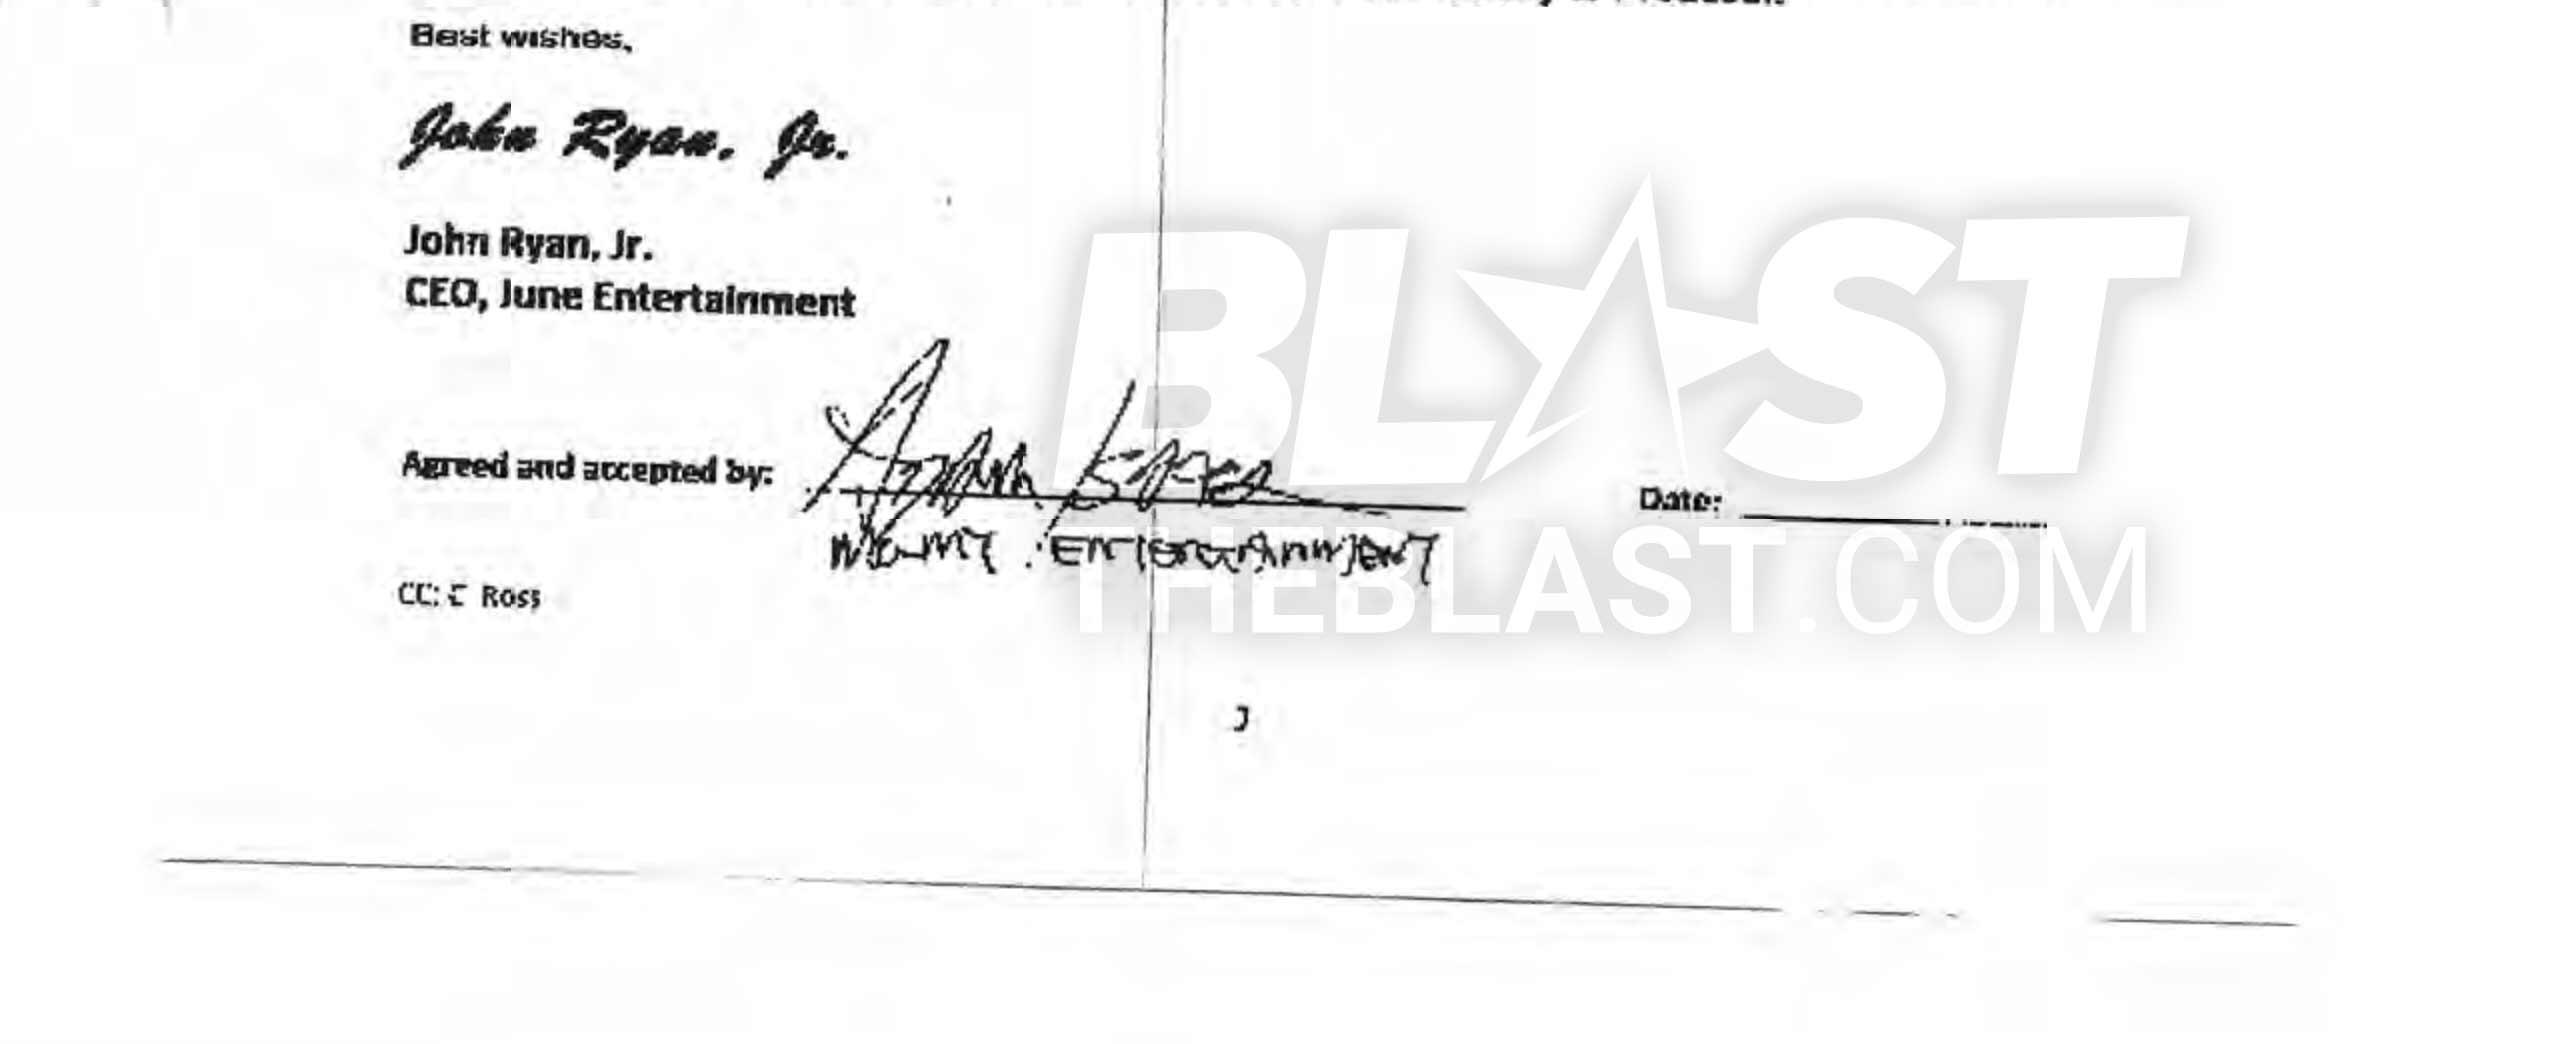 Keira Knightley's agent Adam Isaacs' fake signature